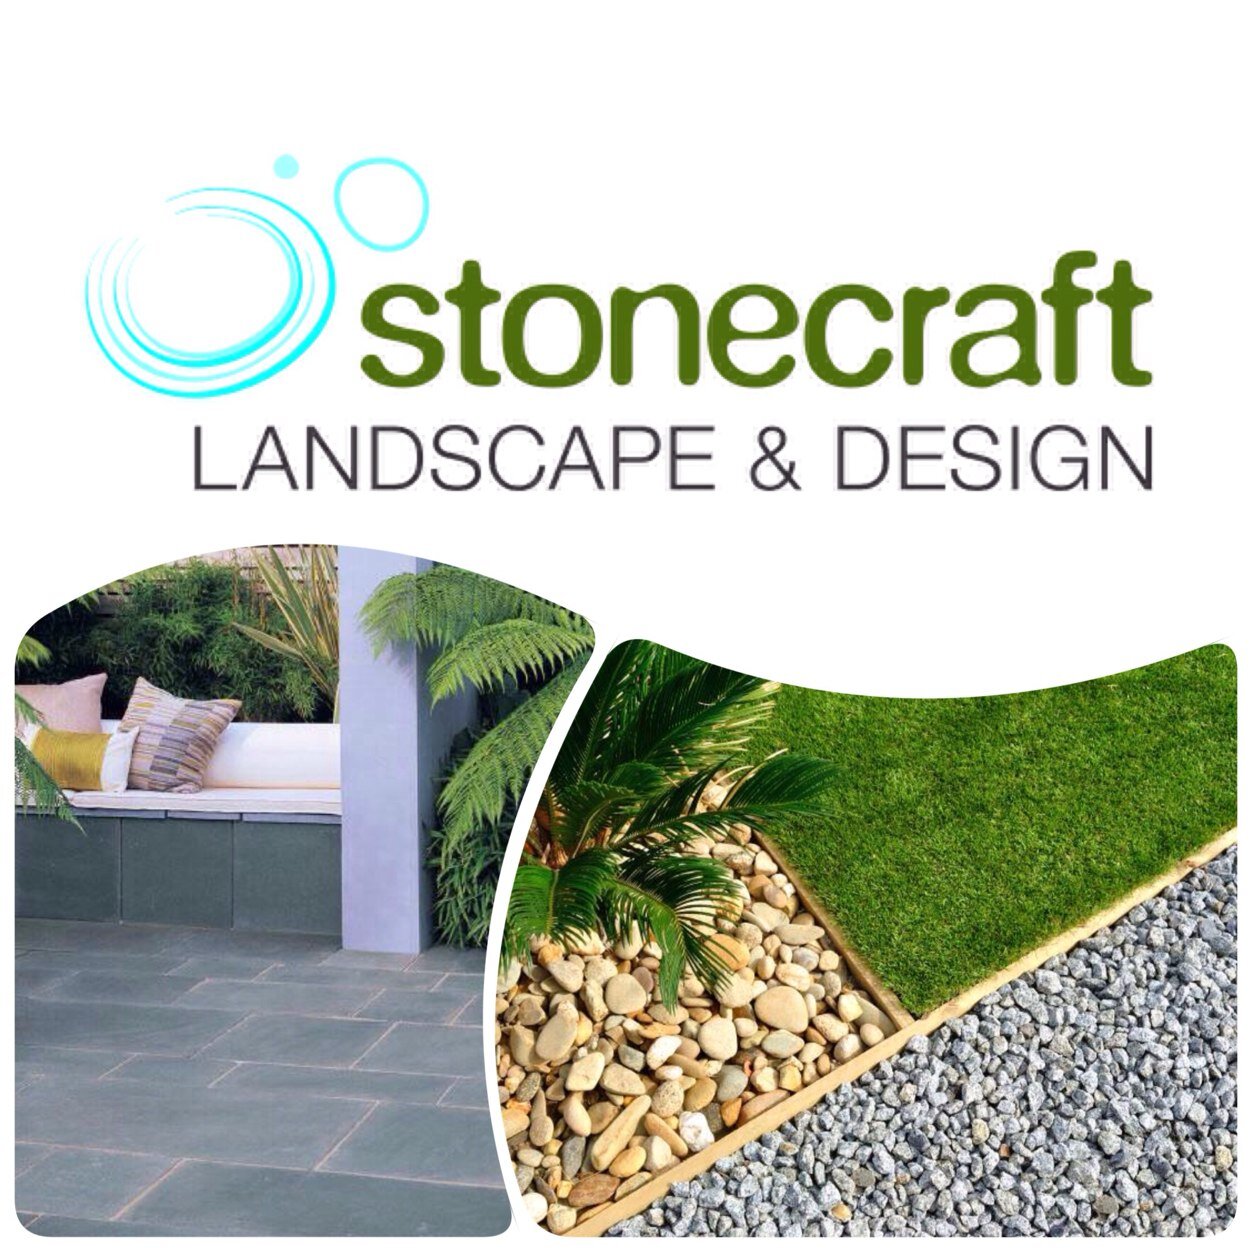 Award-winning landscape design • Lytham • Bpool • Preston • 07841757583 • ben@stonecraftltd.co.uk • london stone • Trading standards vetted #NSC